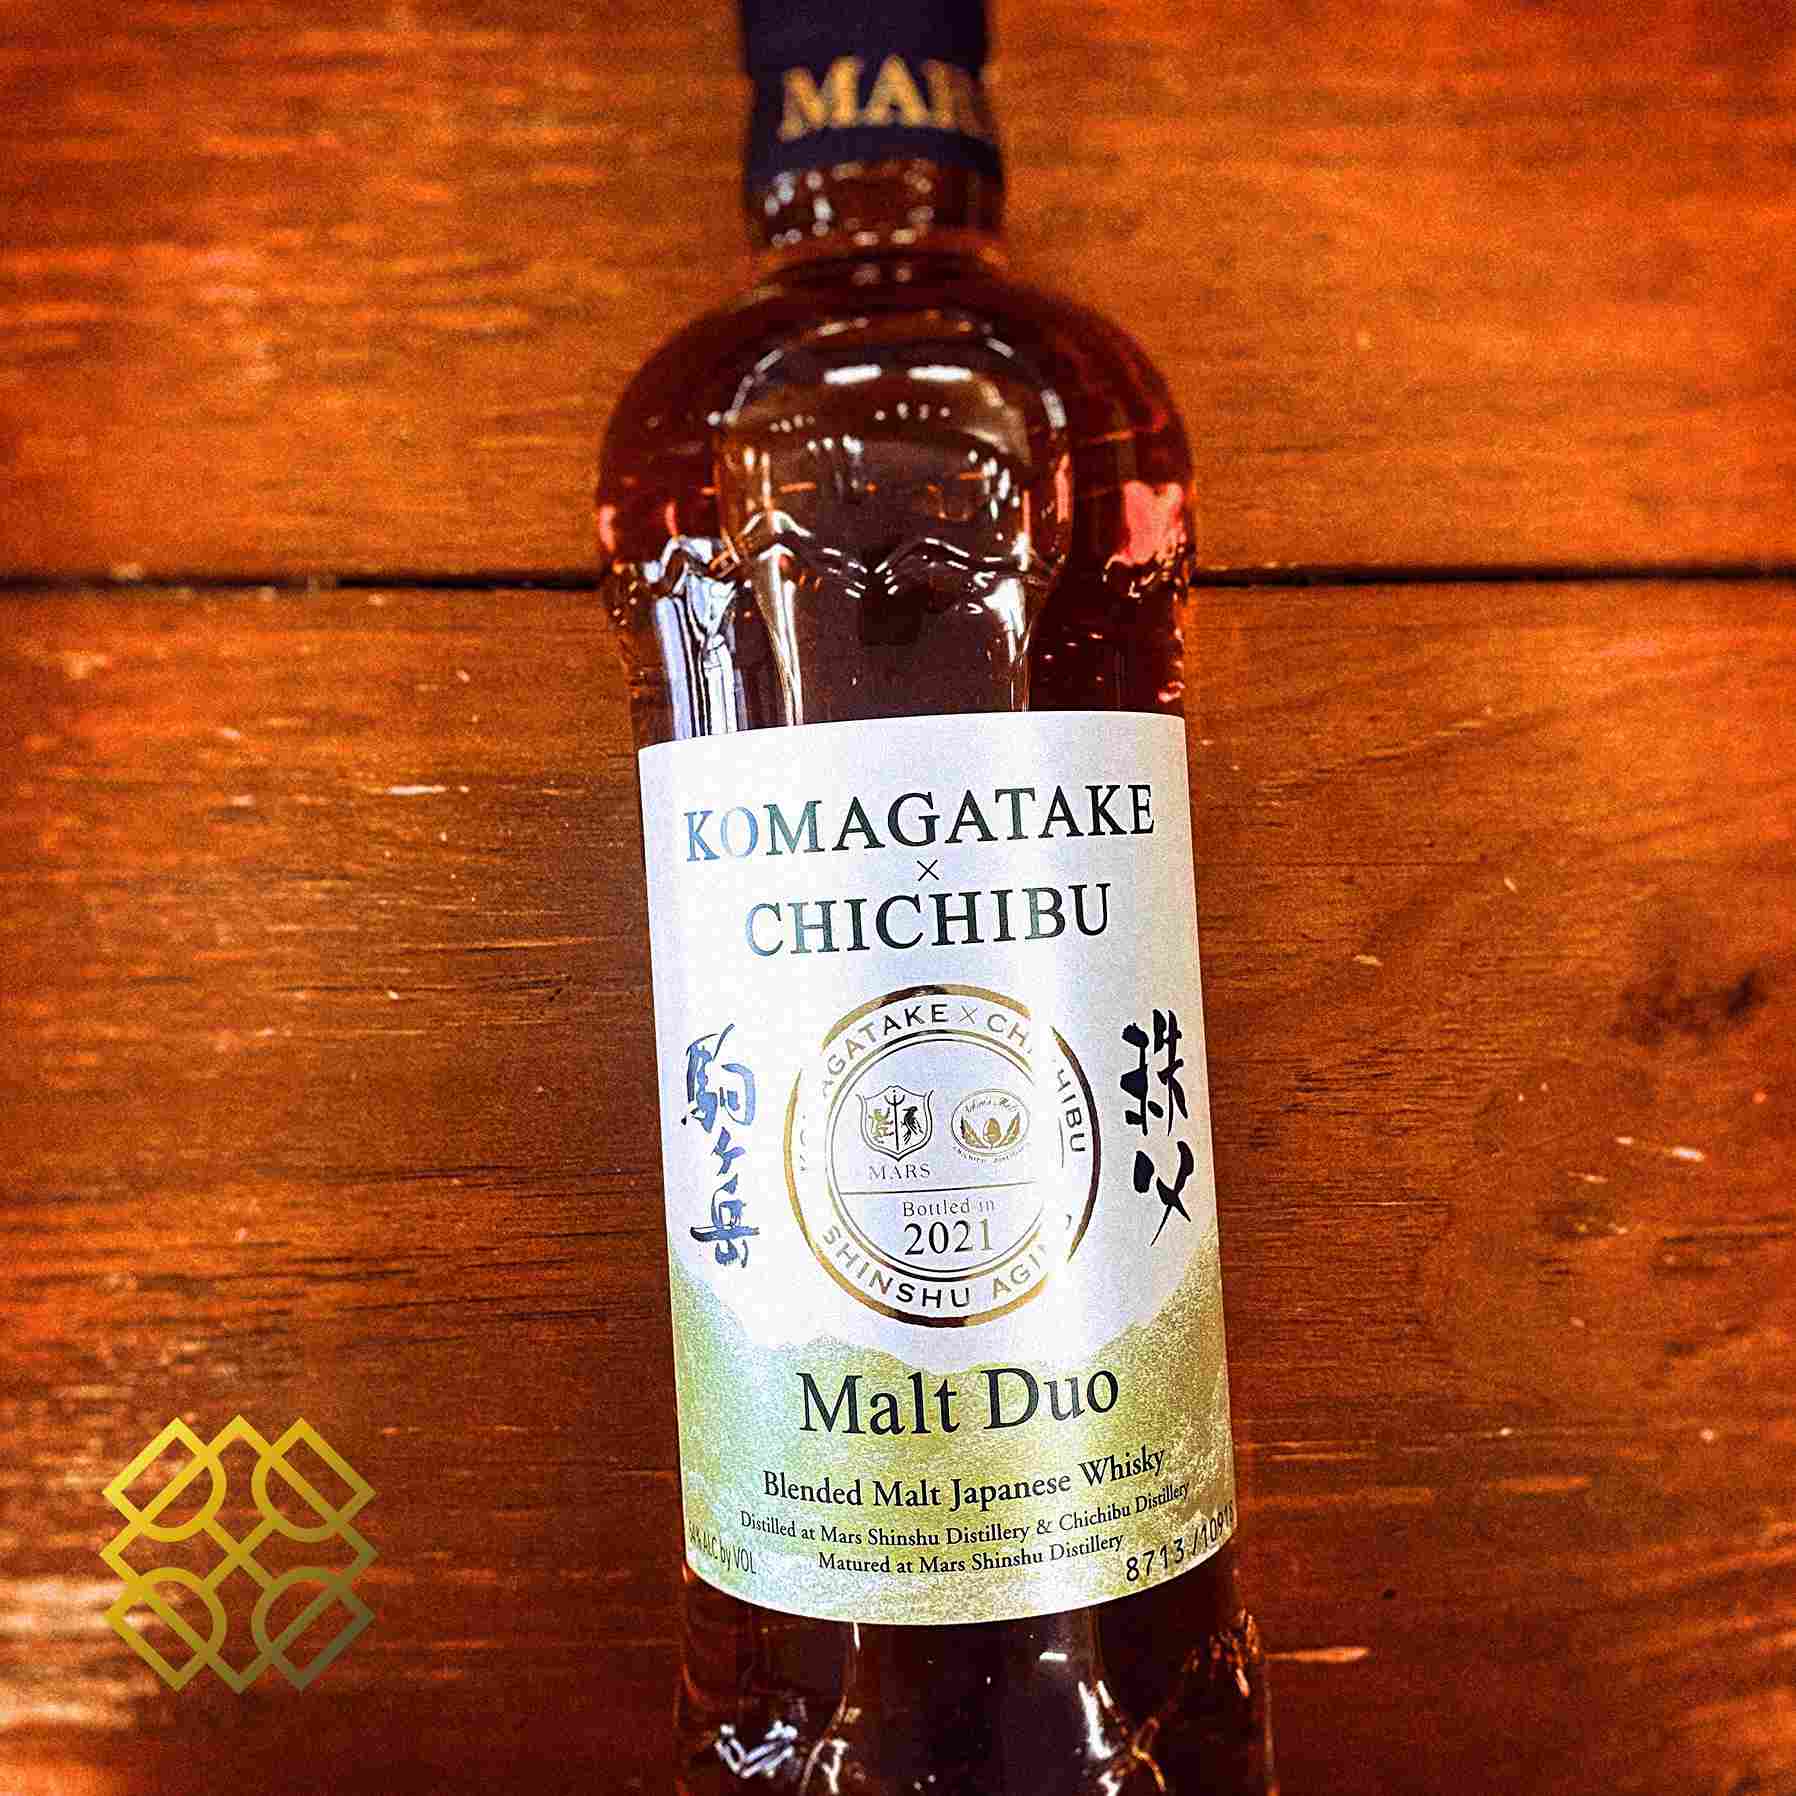 Mars - Komagatake 駒ケ岳 x Chichibu 秩父 Malt Duo, 54%, Blended Malt Whisky 威士忌